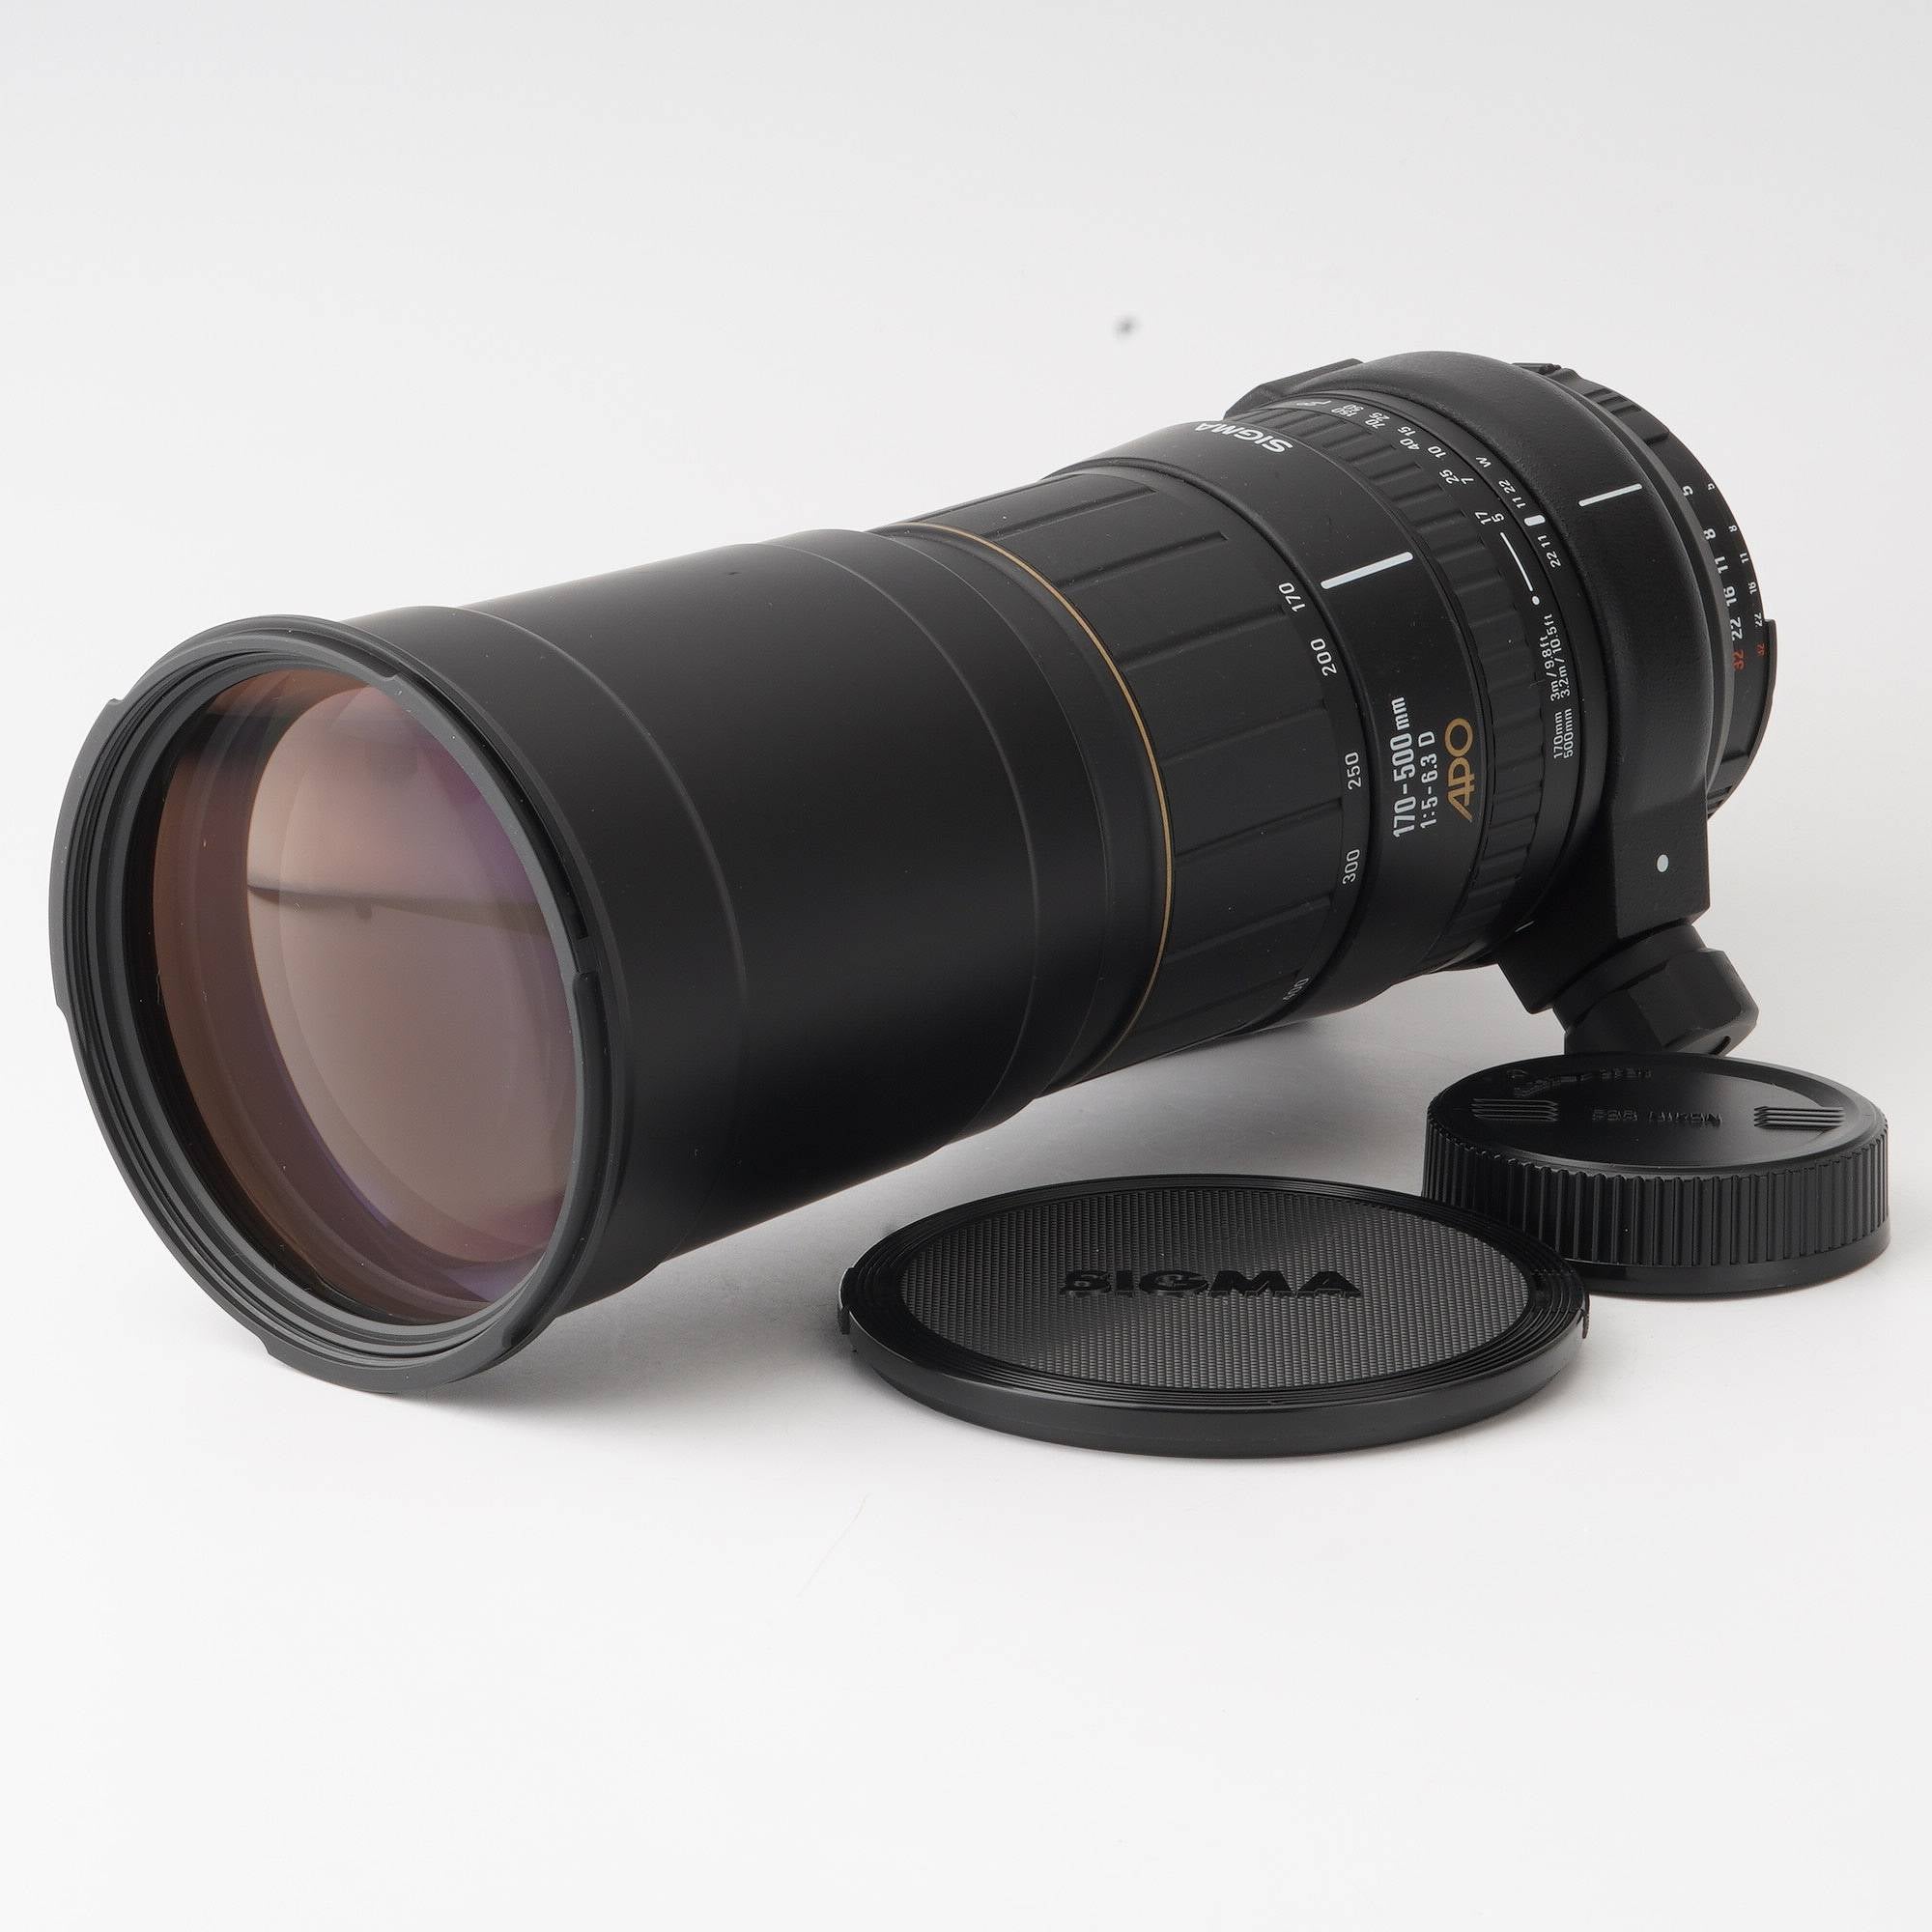 Sigma 170-500mm f/5-6.3 D APO for Nikon